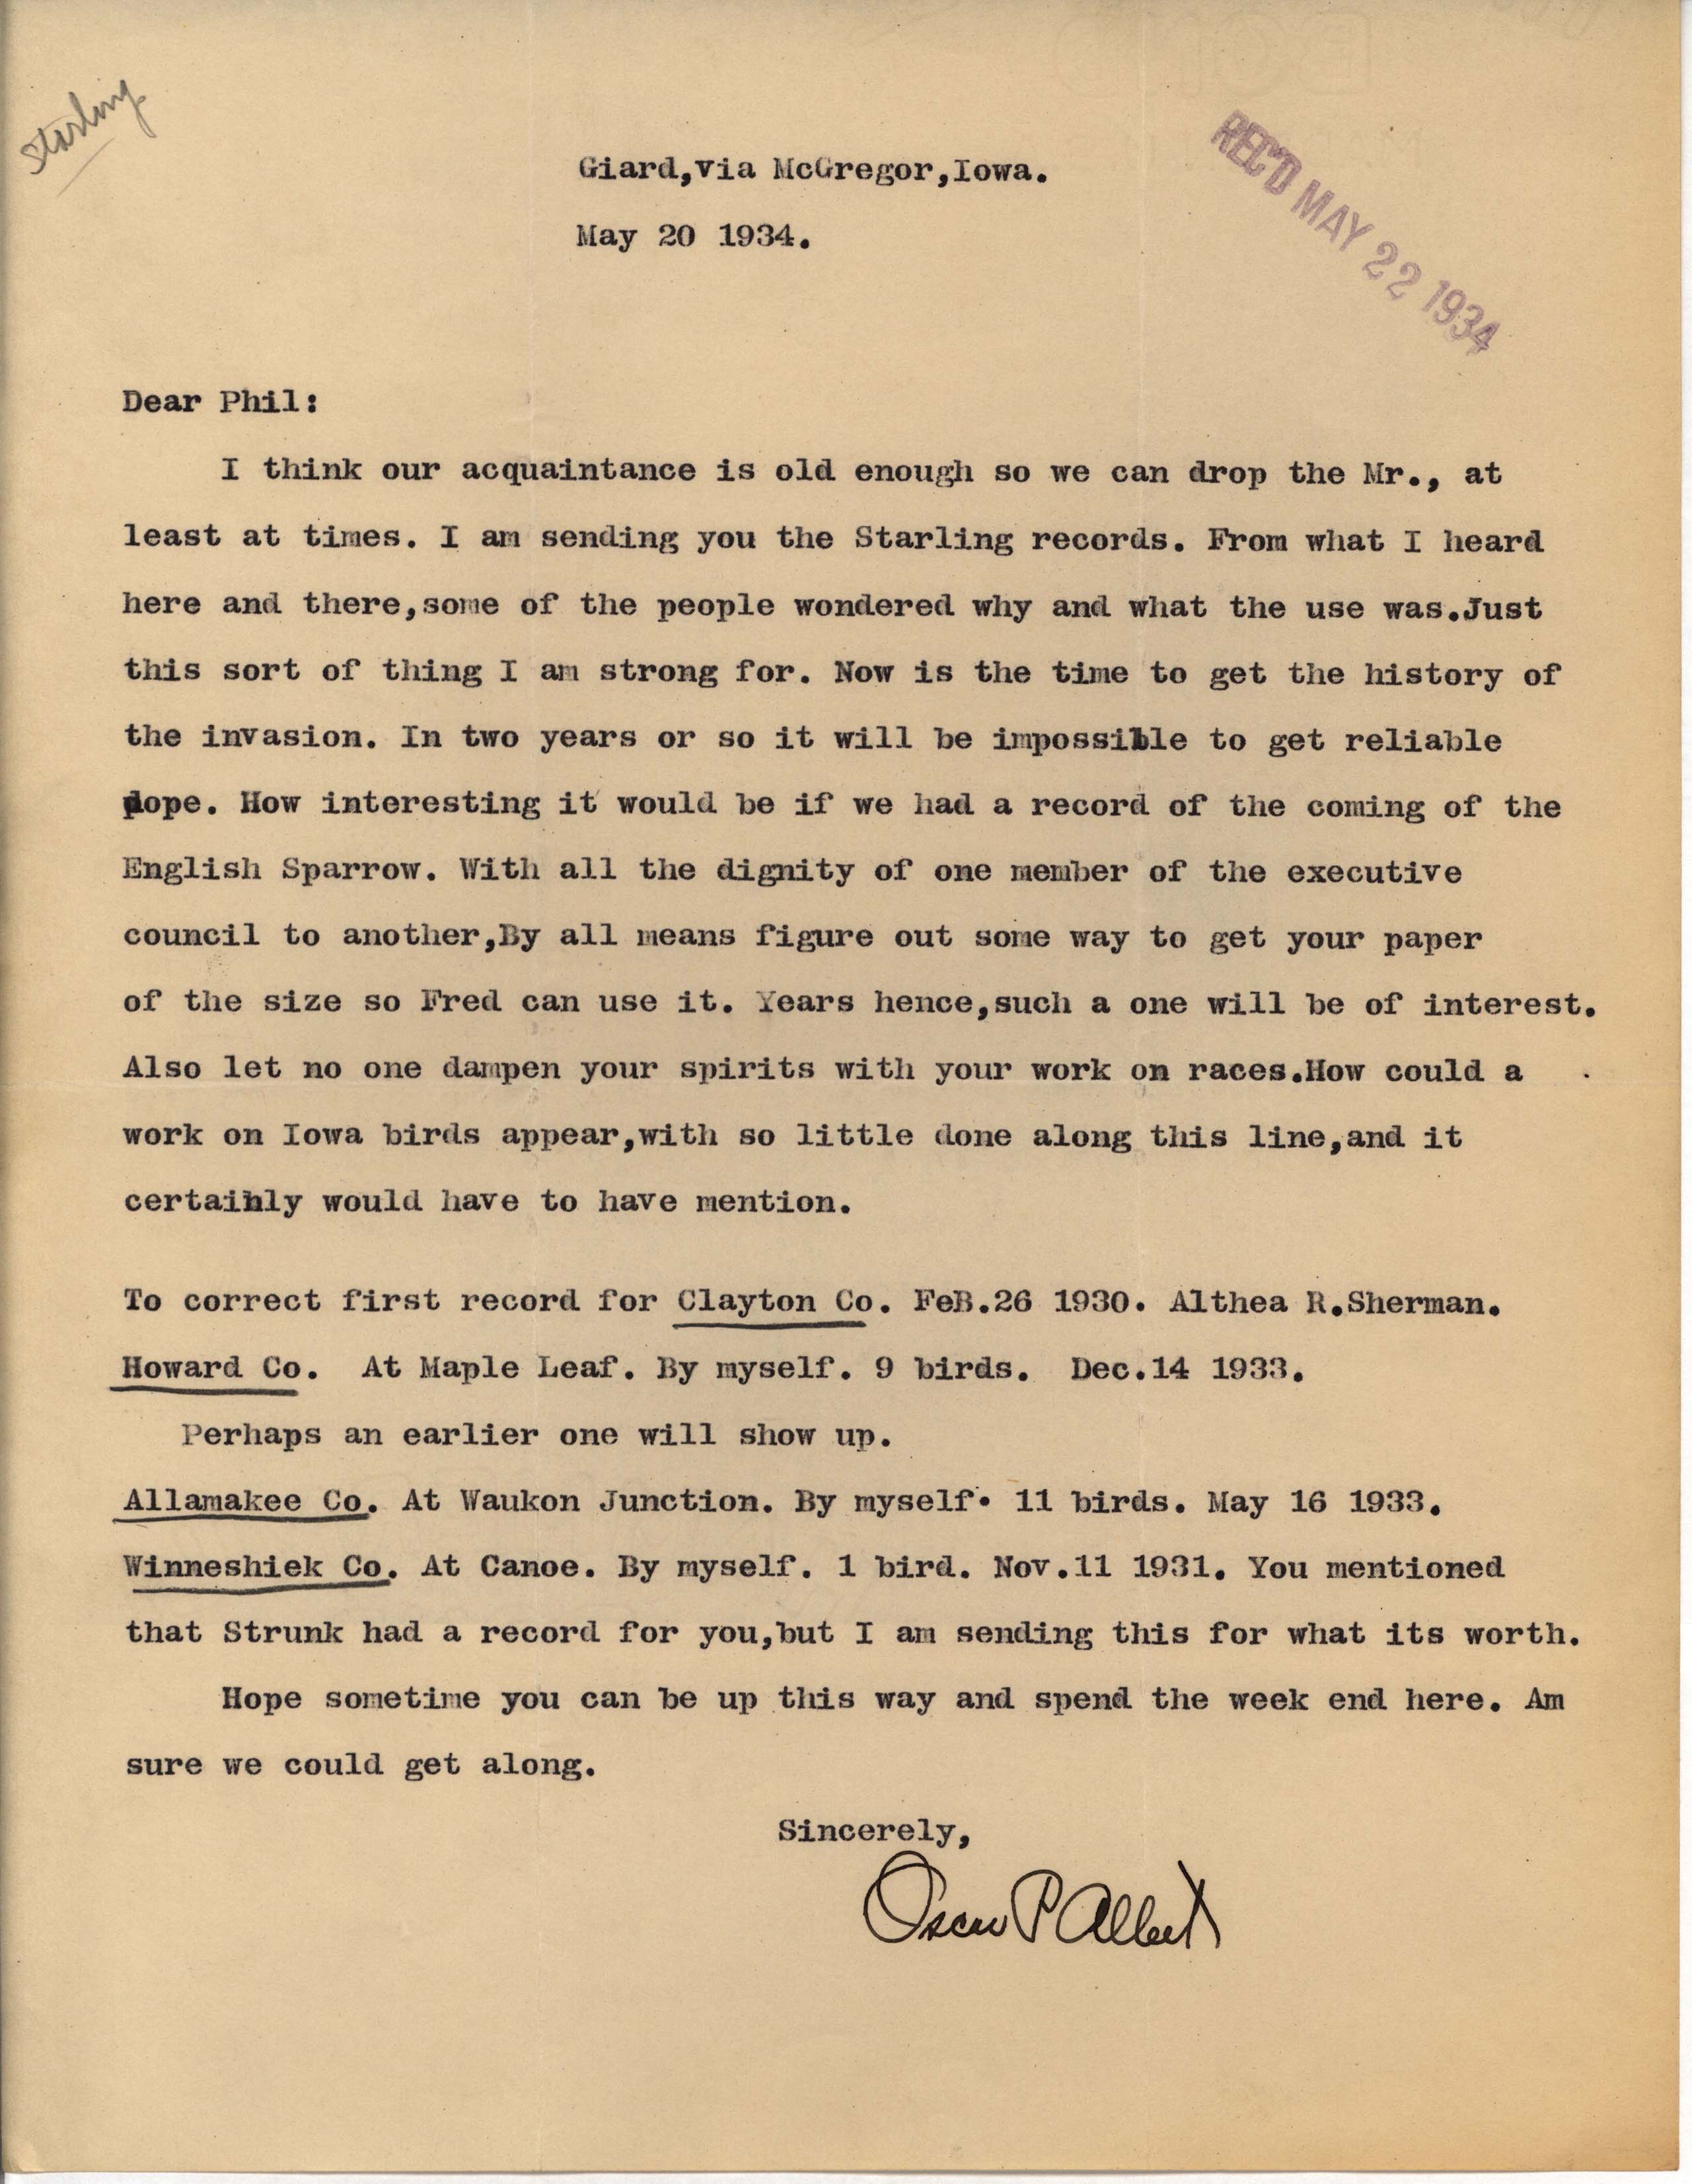 Oscar Allert letter to Philip DuMont regarding Starling sightings, May 20, 1934